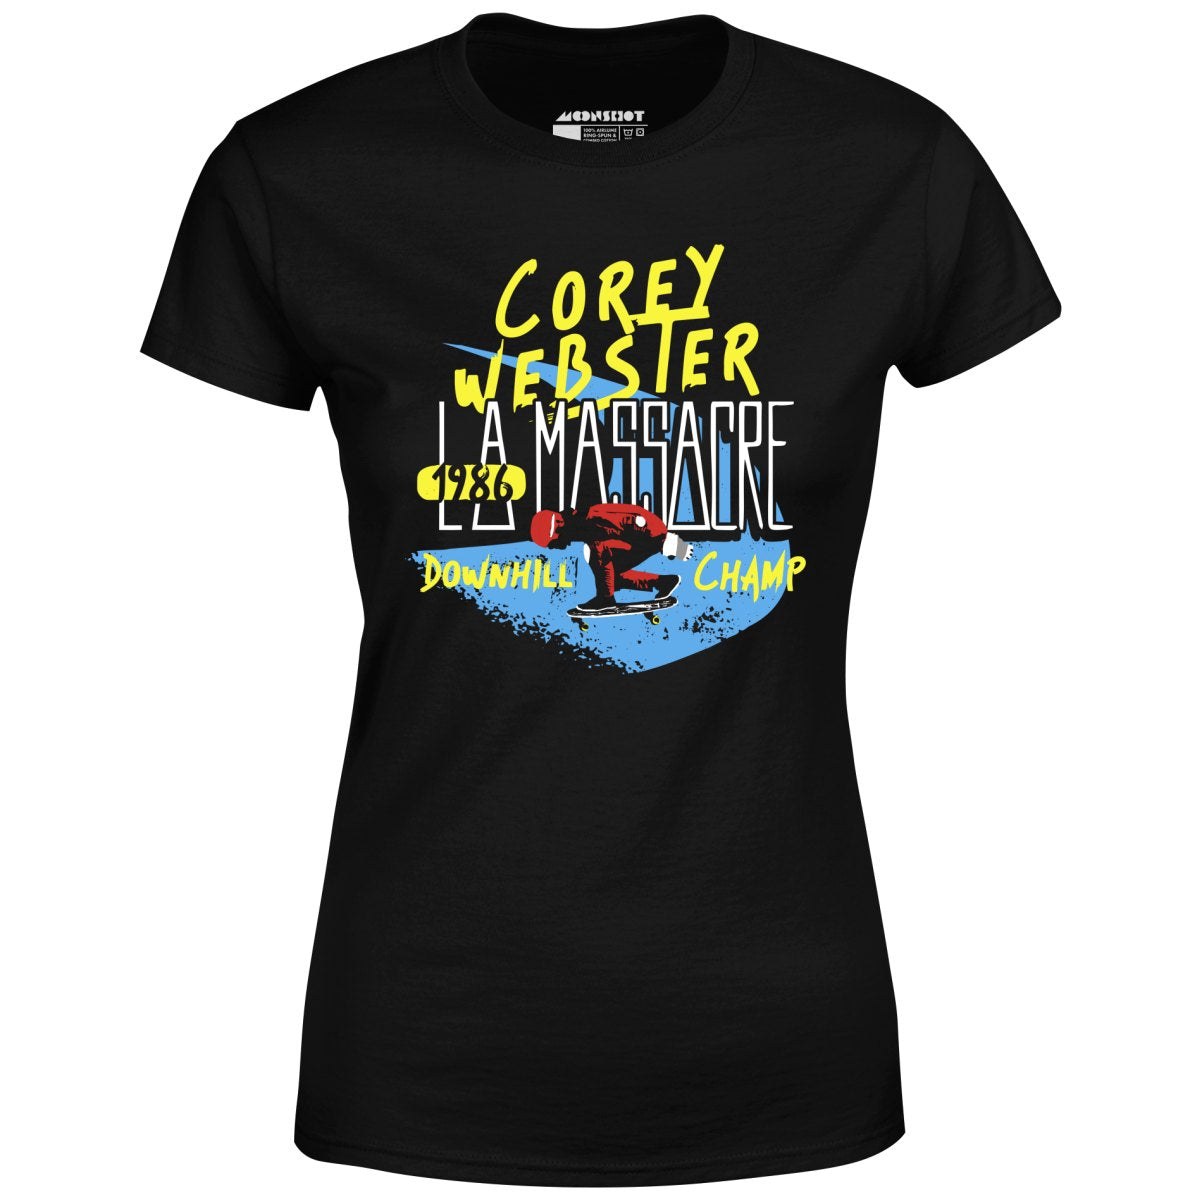 Corey Webster 1986 LA Massacre Downhill Champ - Women's T-Shirt